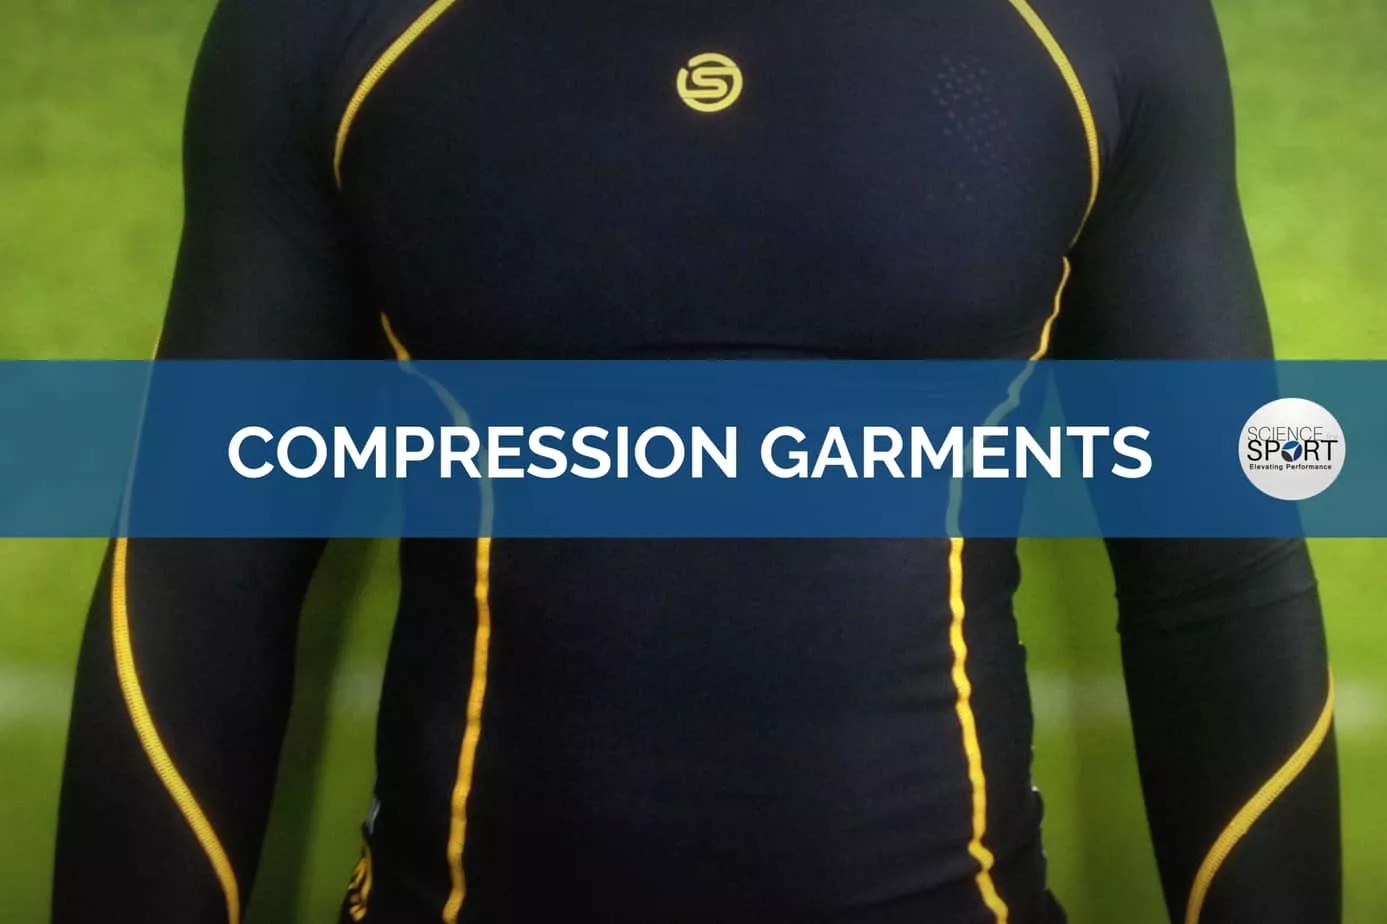 Blog – Do compression garments improve athletic performance